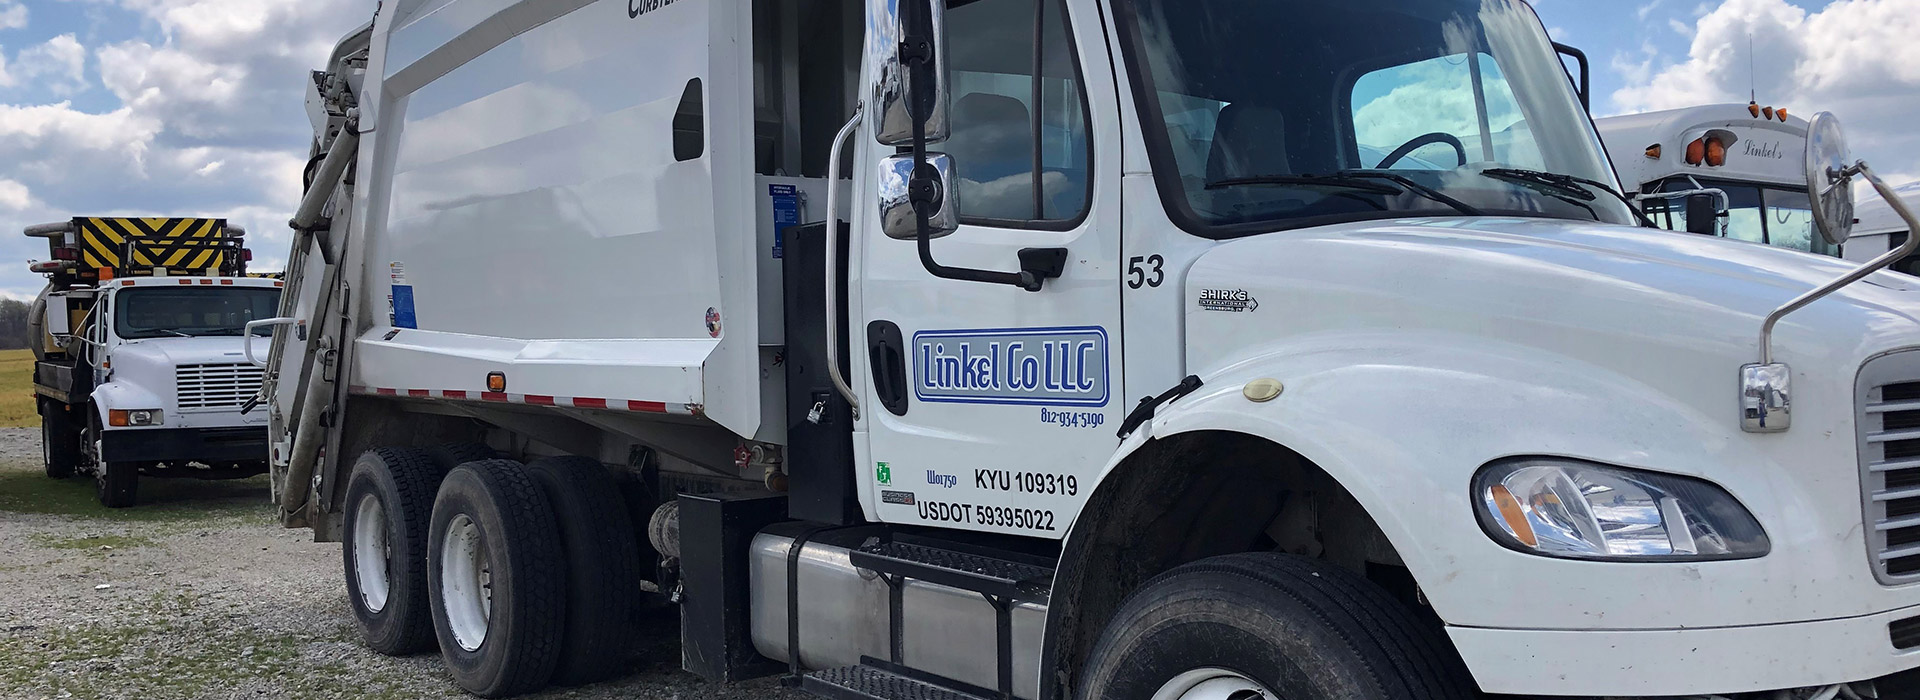 Linkel Company truck